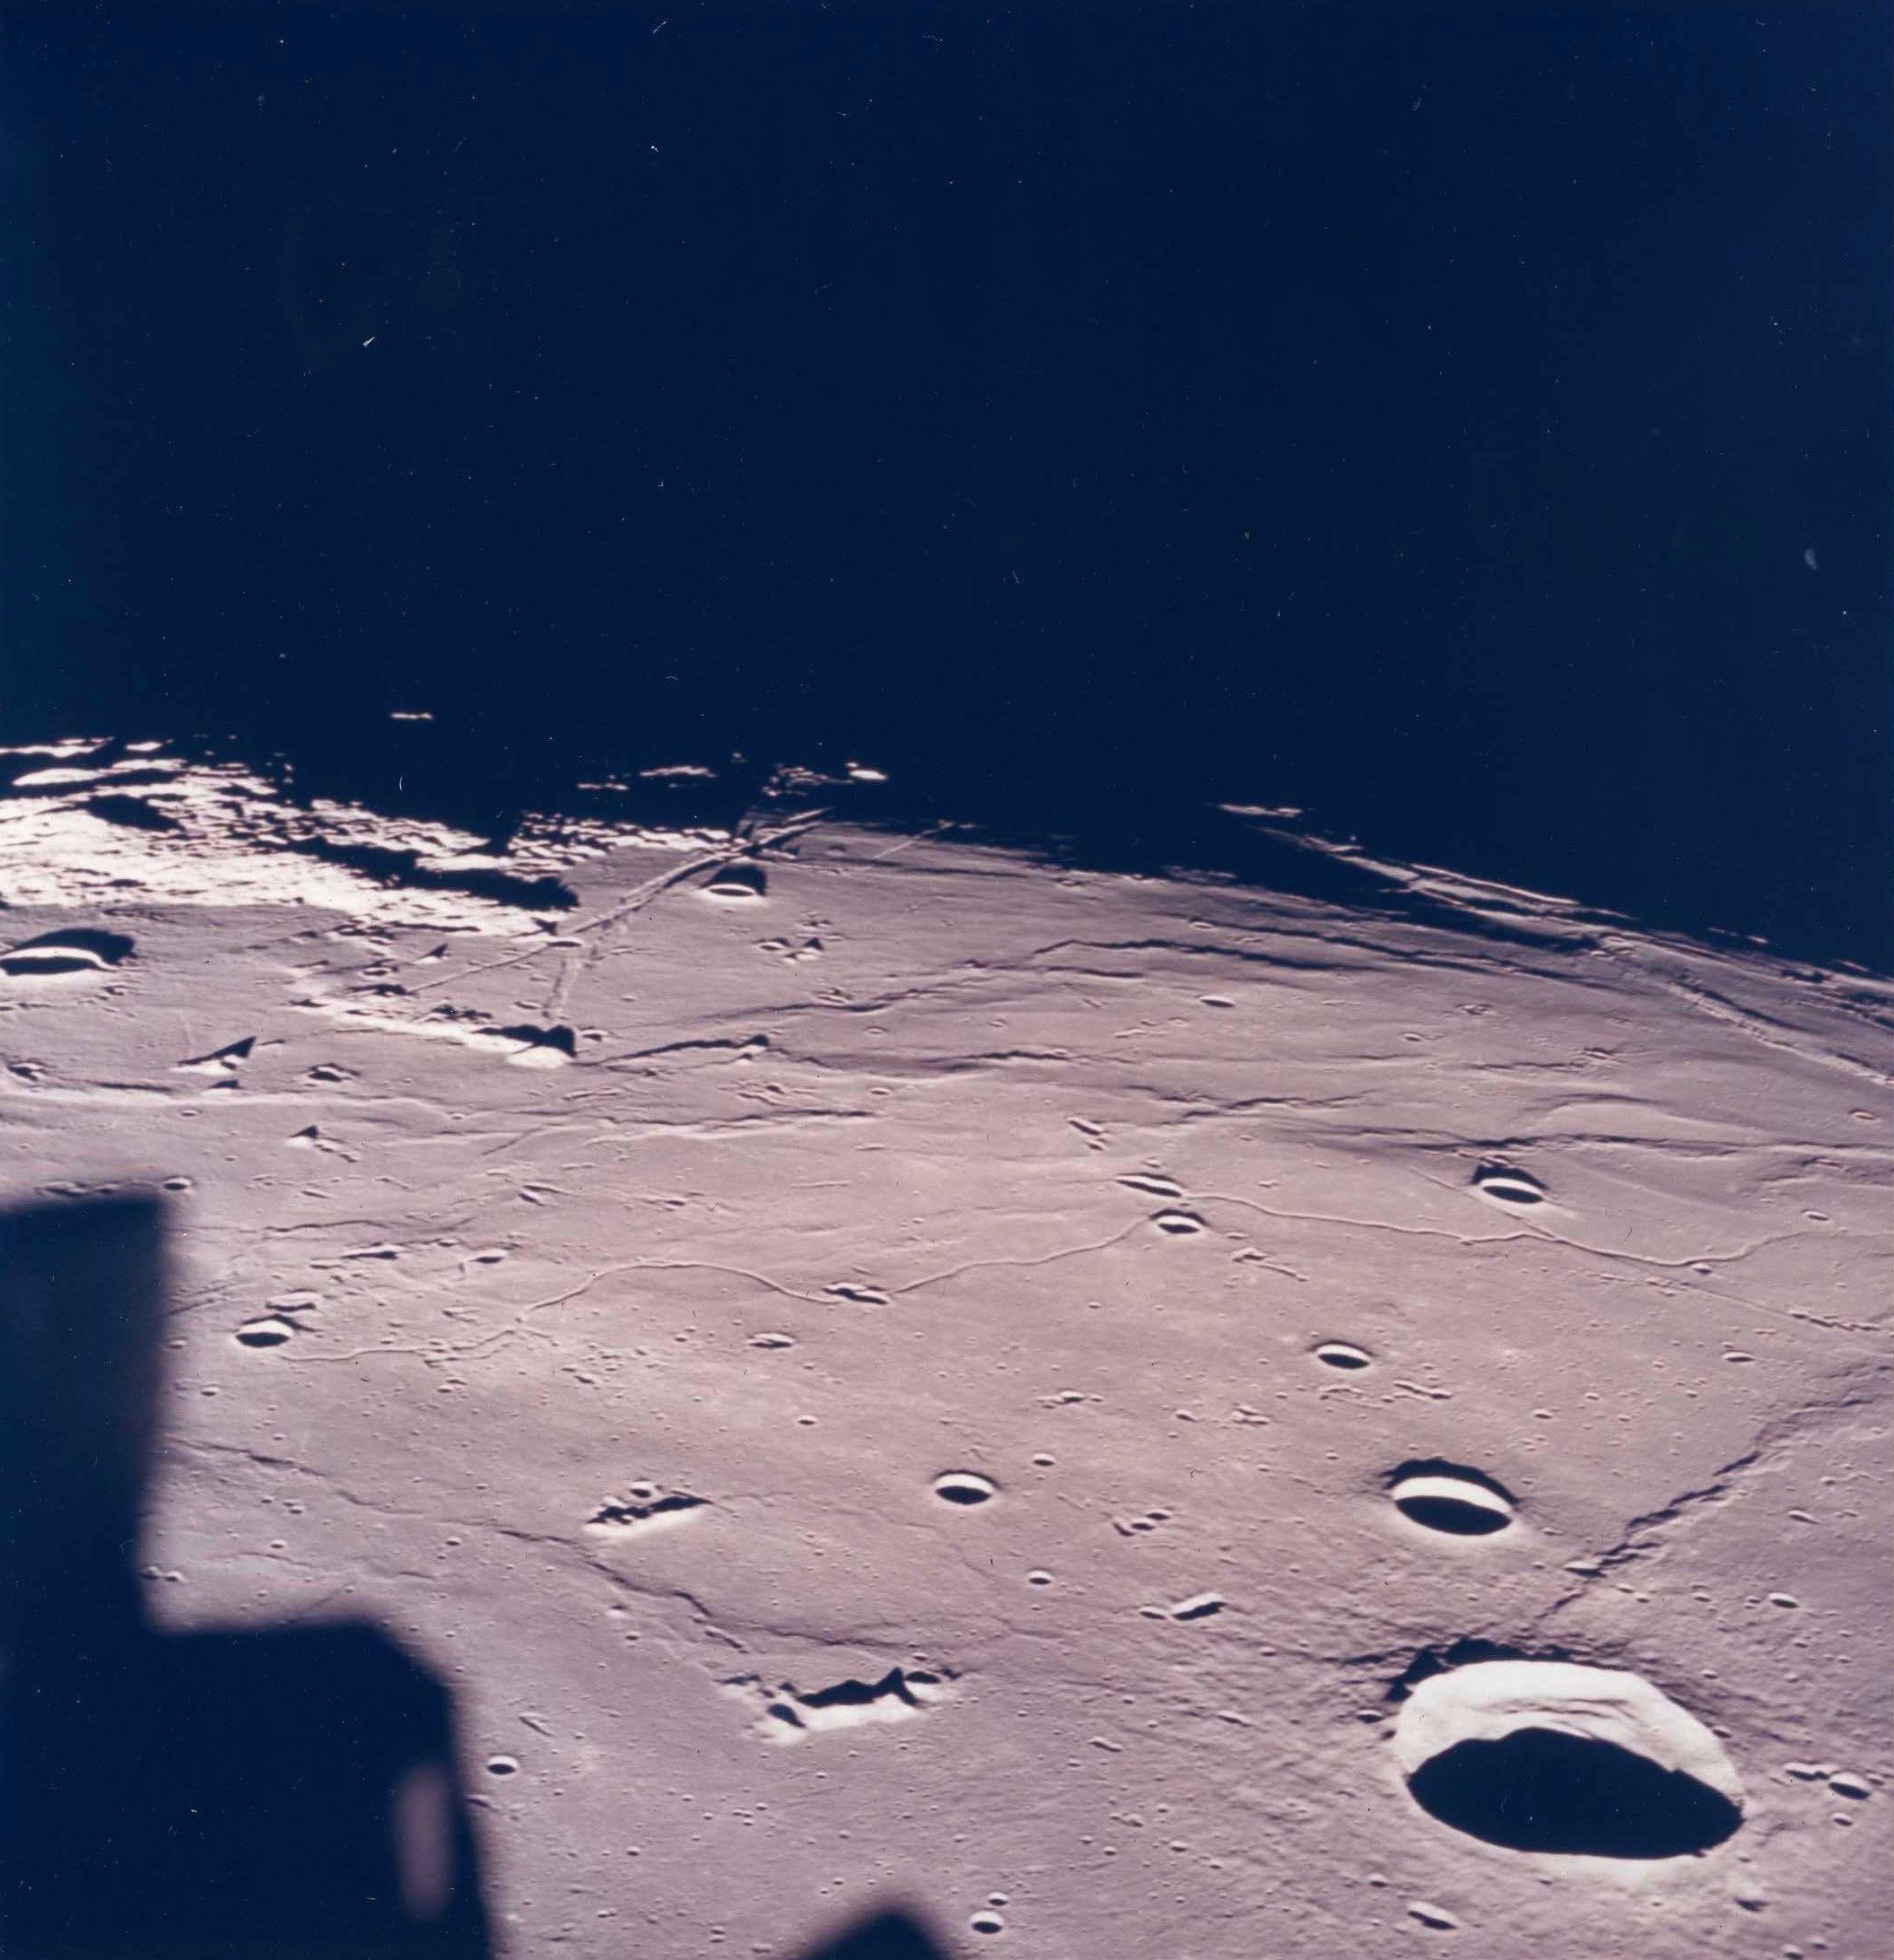 На луне есть деревья. Аполлон 11 море спокойствия. Apollo-11 снимки LRO. Лунный грунт Аполлон 11. Луна и море.